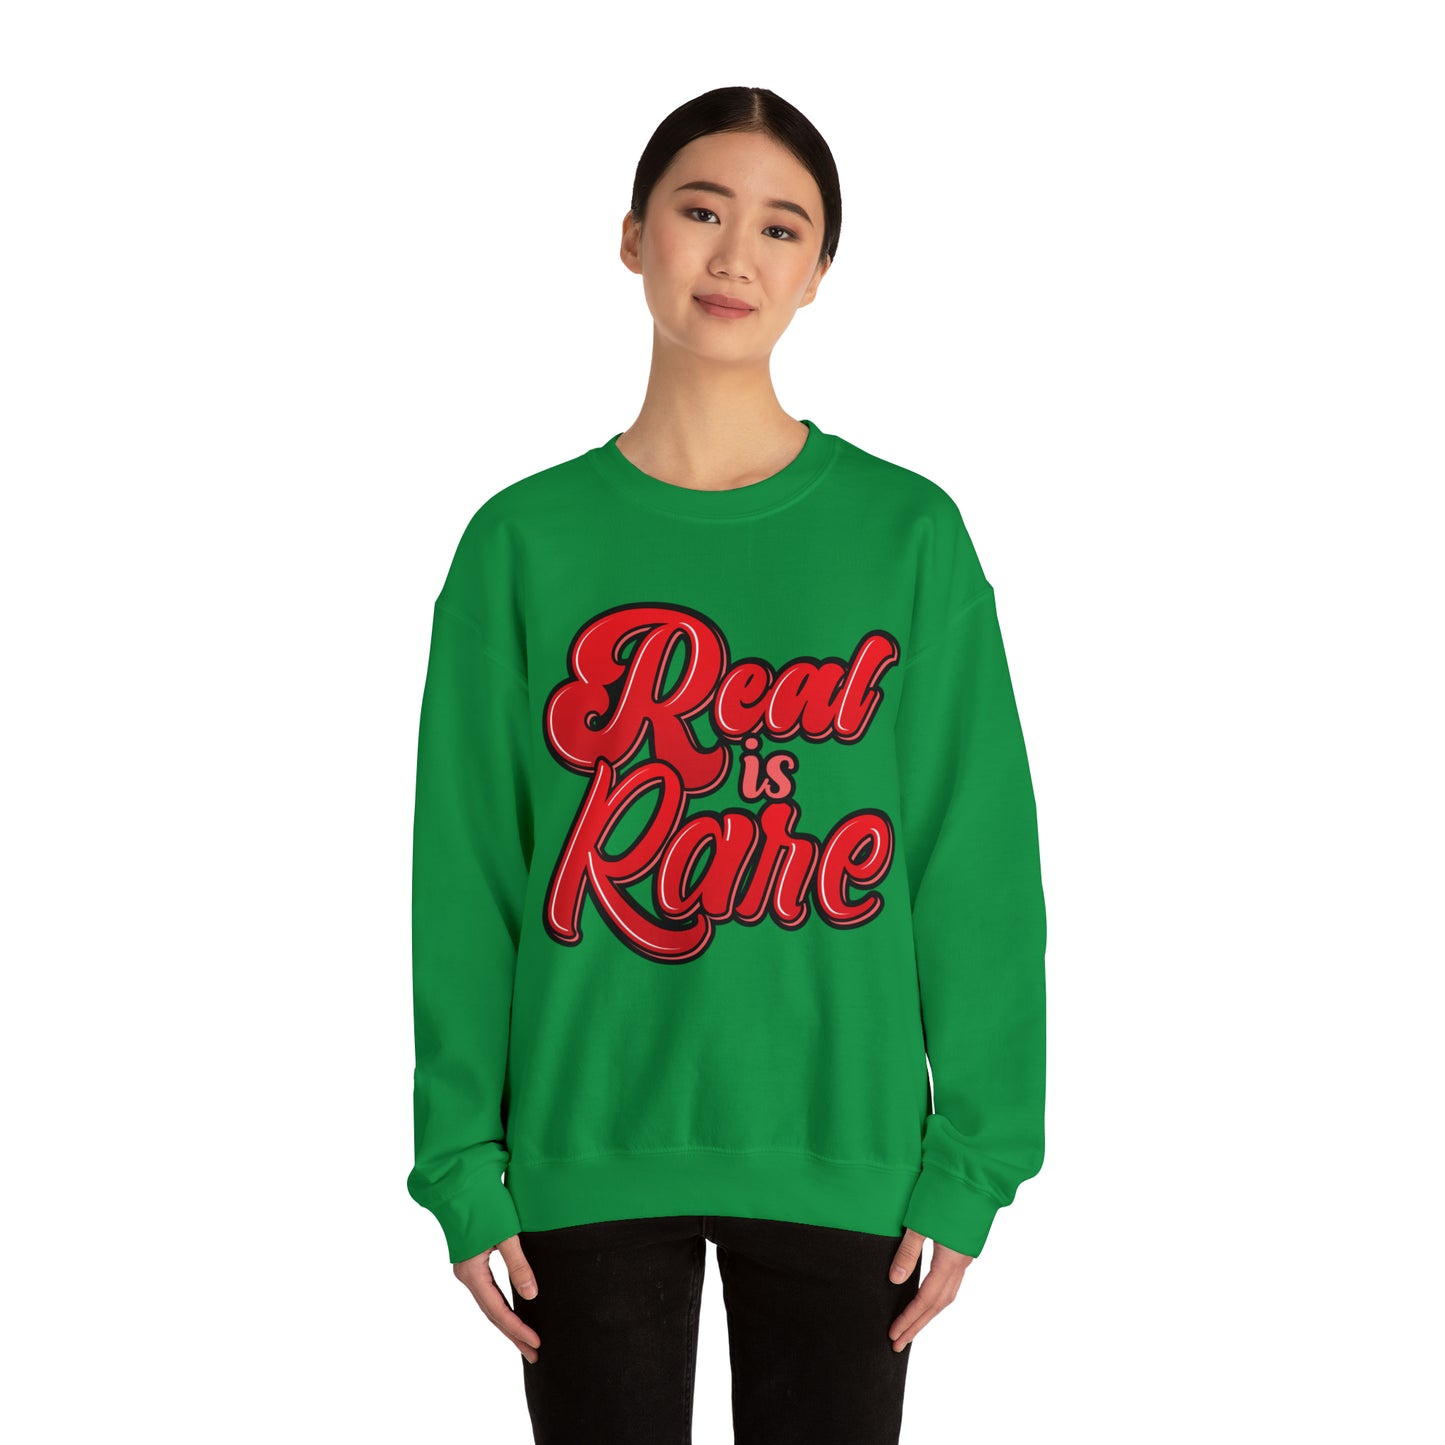 Real is rare Crewneck Sweatshirt